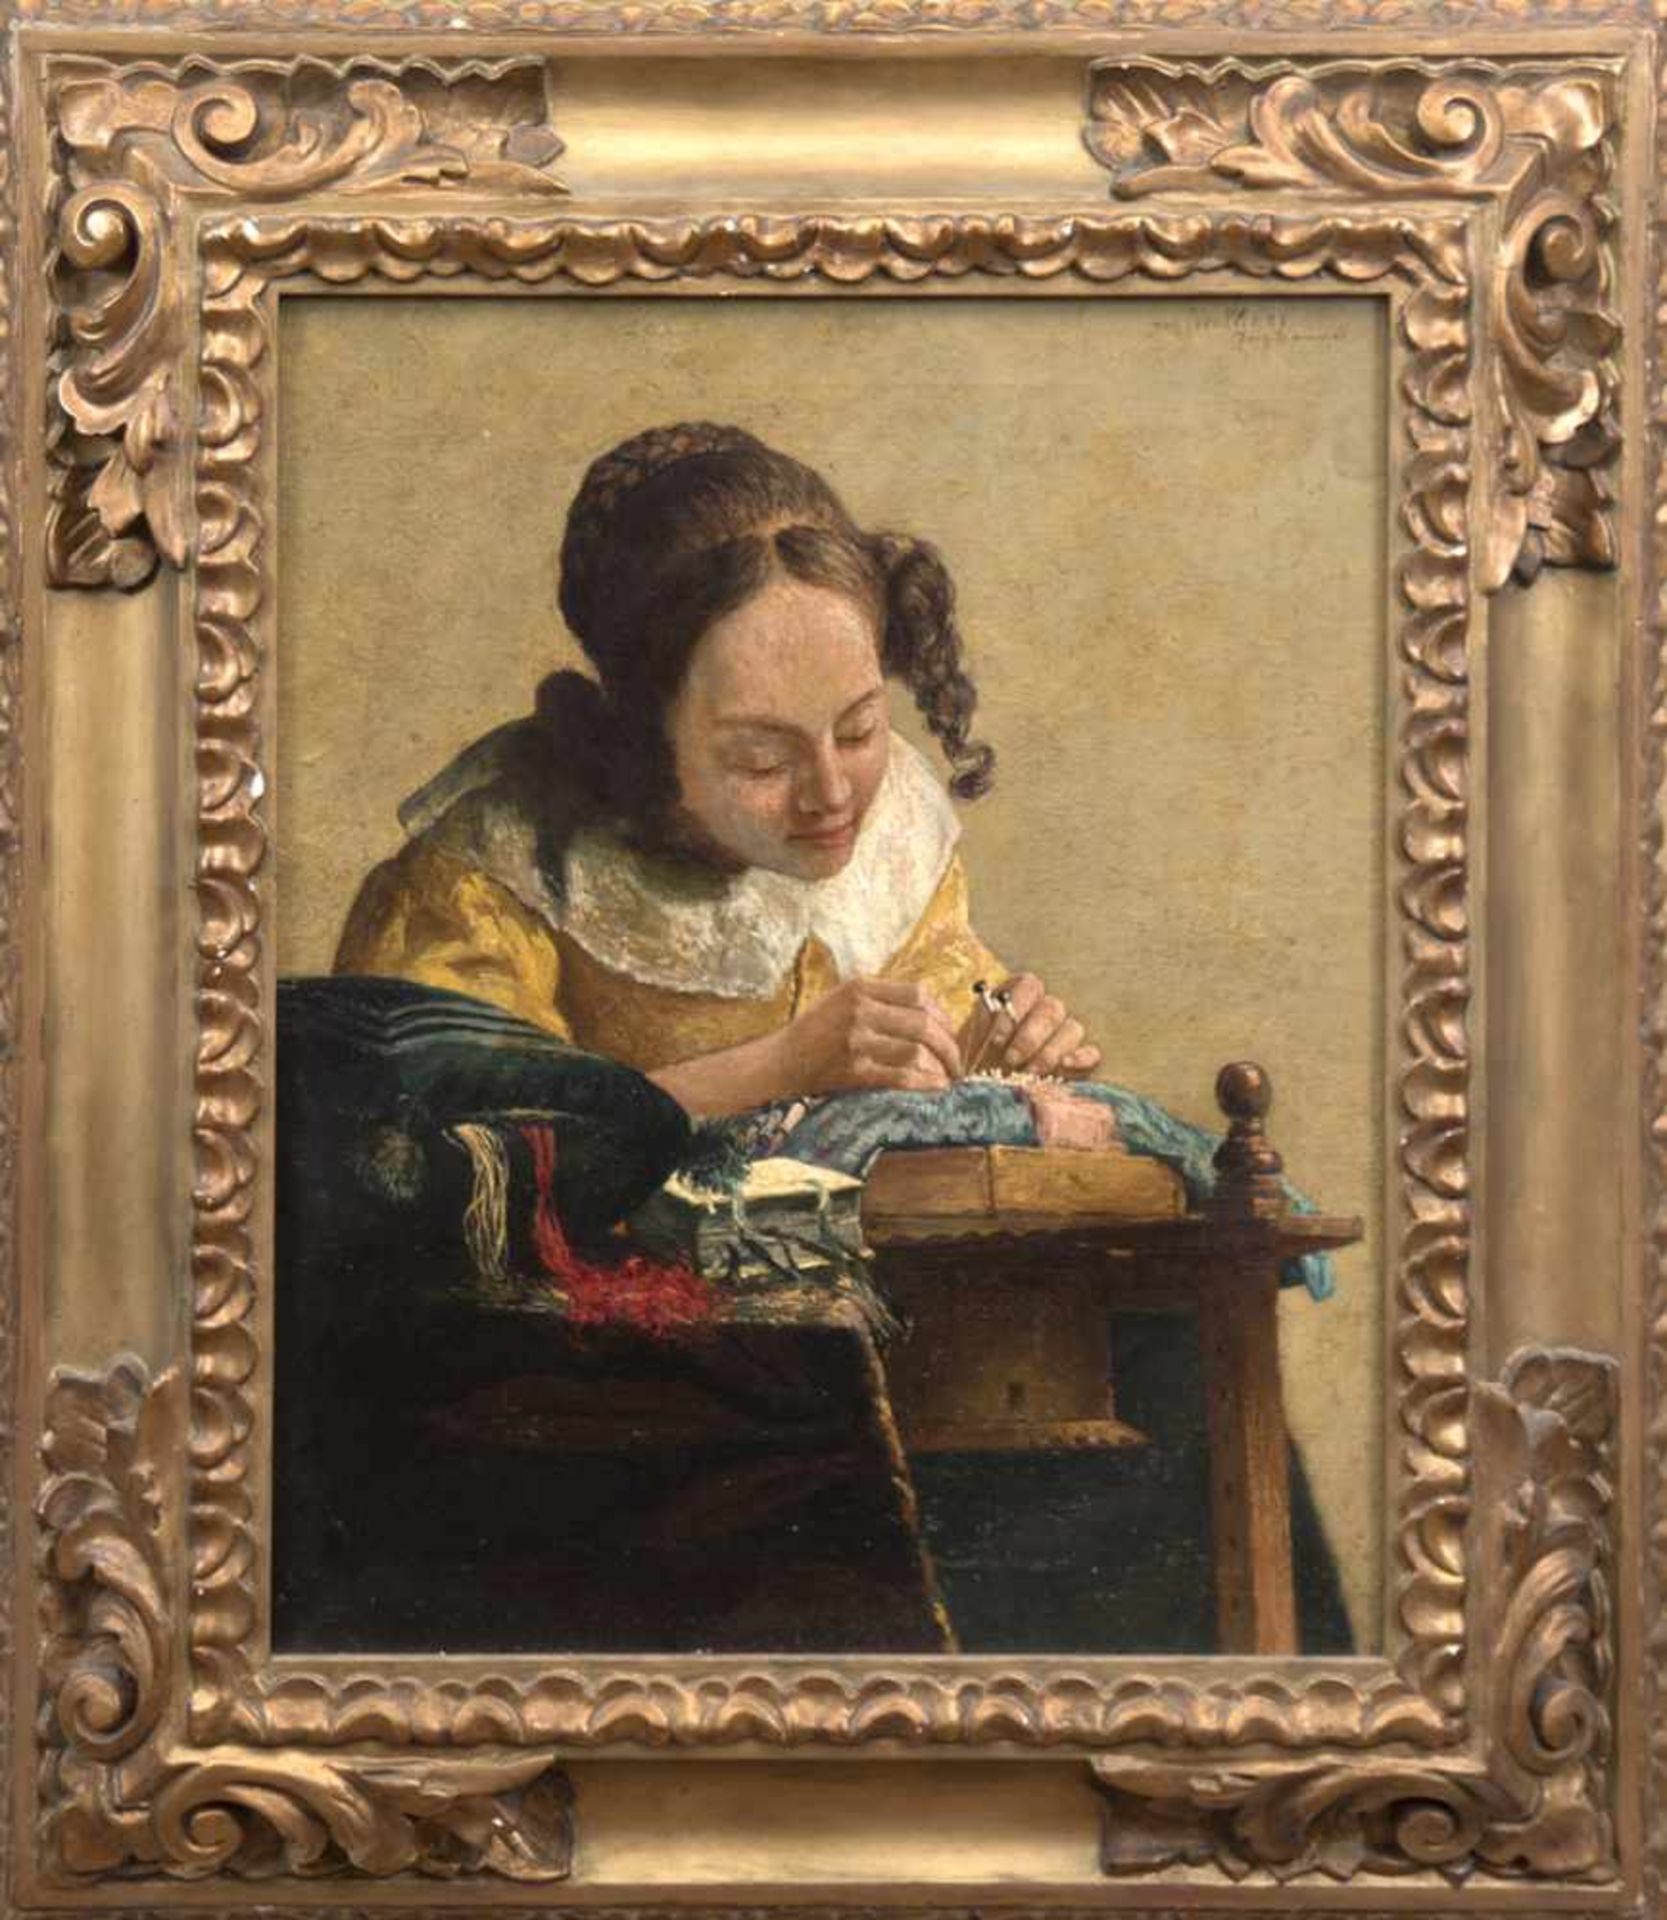 Sommer, Jörg (1881-?) "Die Spitzenklöpplerin", Kopie nach J. Vermeer, Öl/Lw., sign. o.r.,56x45 cm,